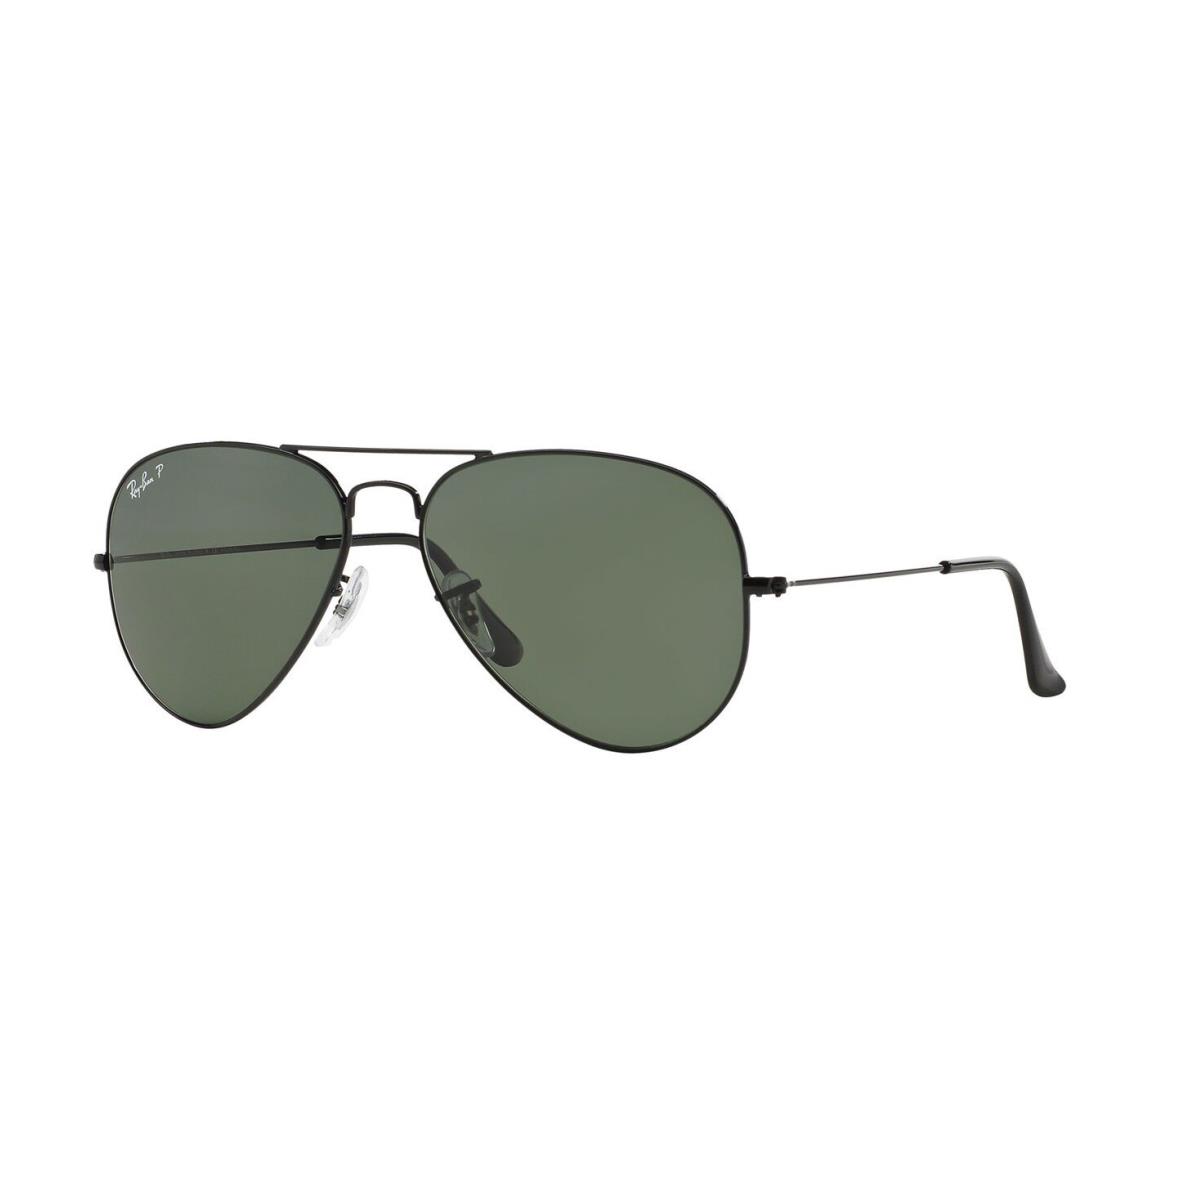 Ray Ban Fashion Aviator RB3025 002/58 Black Polarized Green Sunglasses